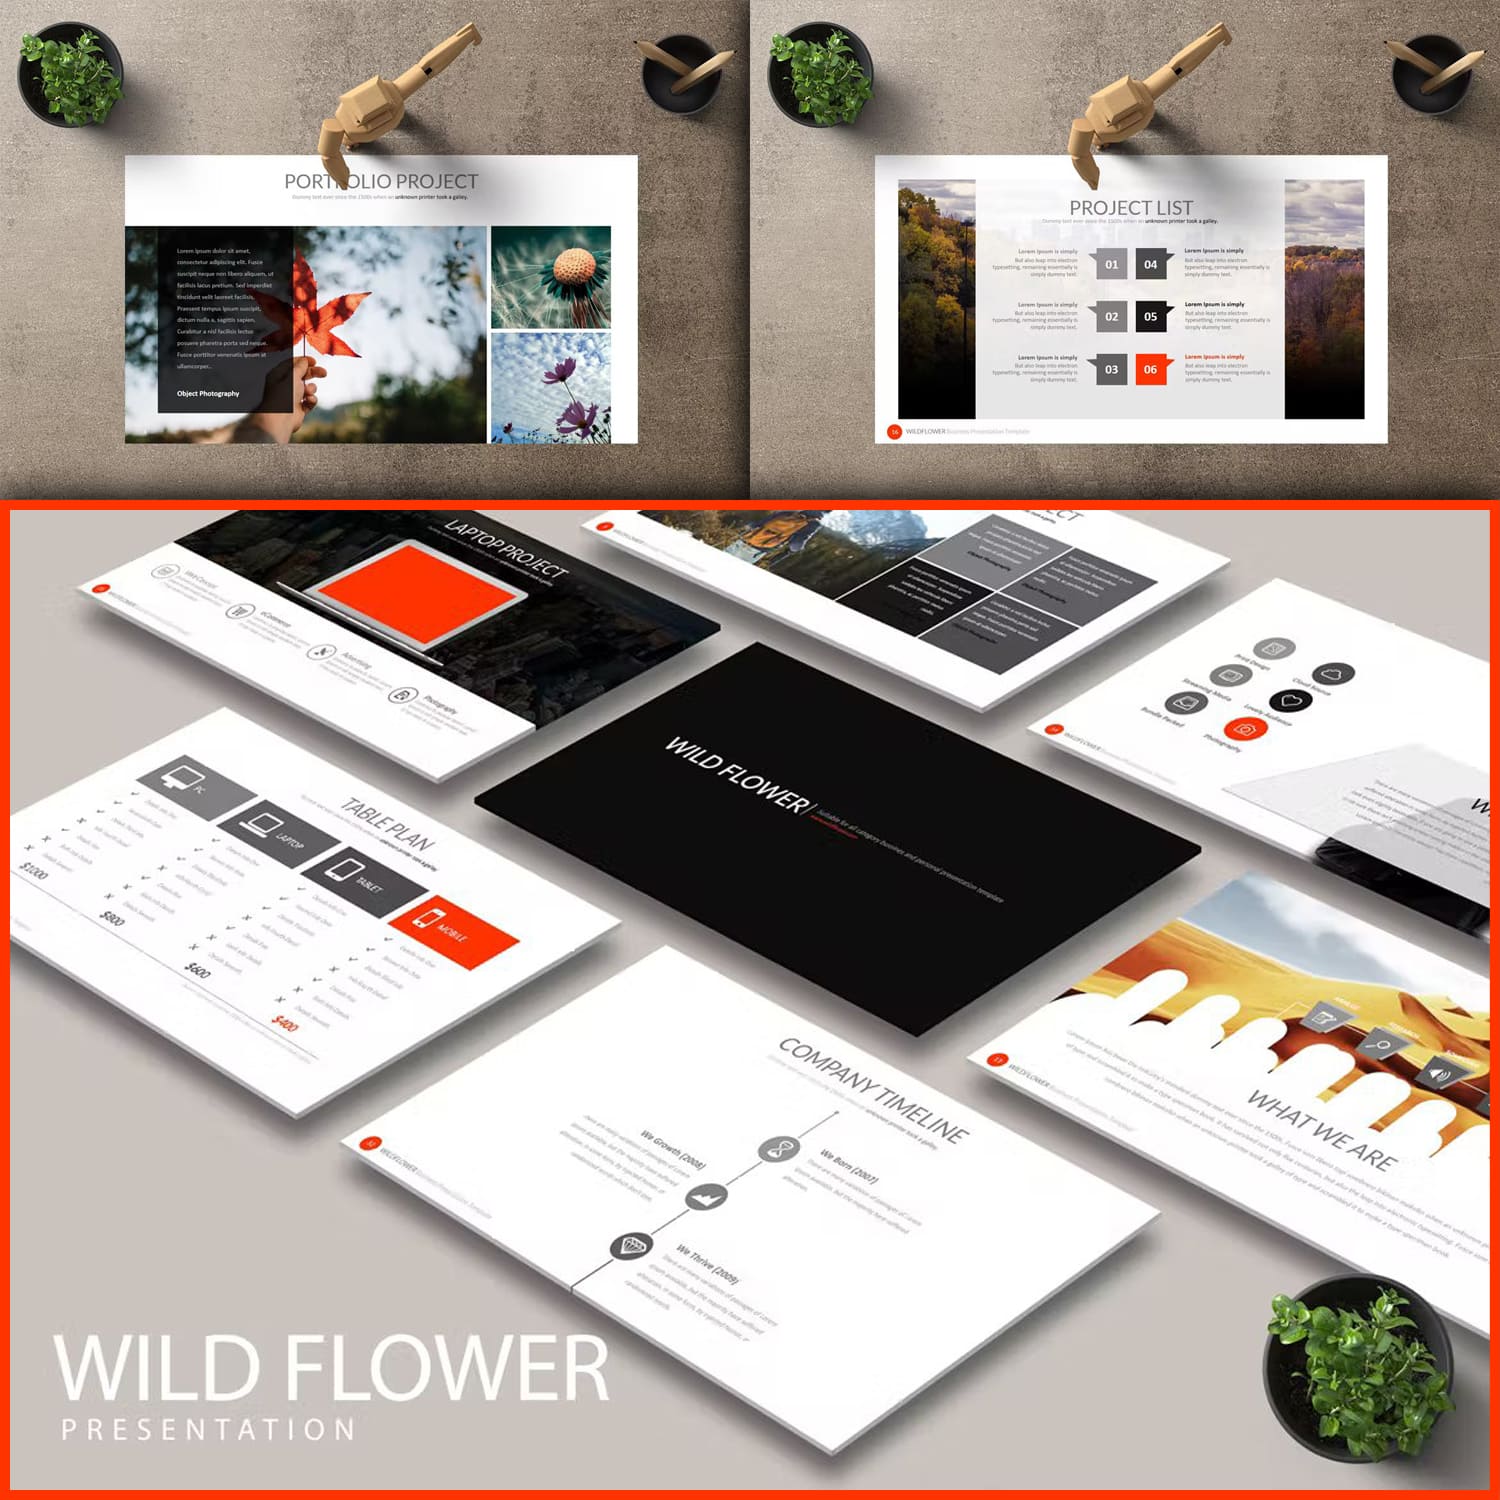 Wild Flower Powerpoint created by Artmonk.